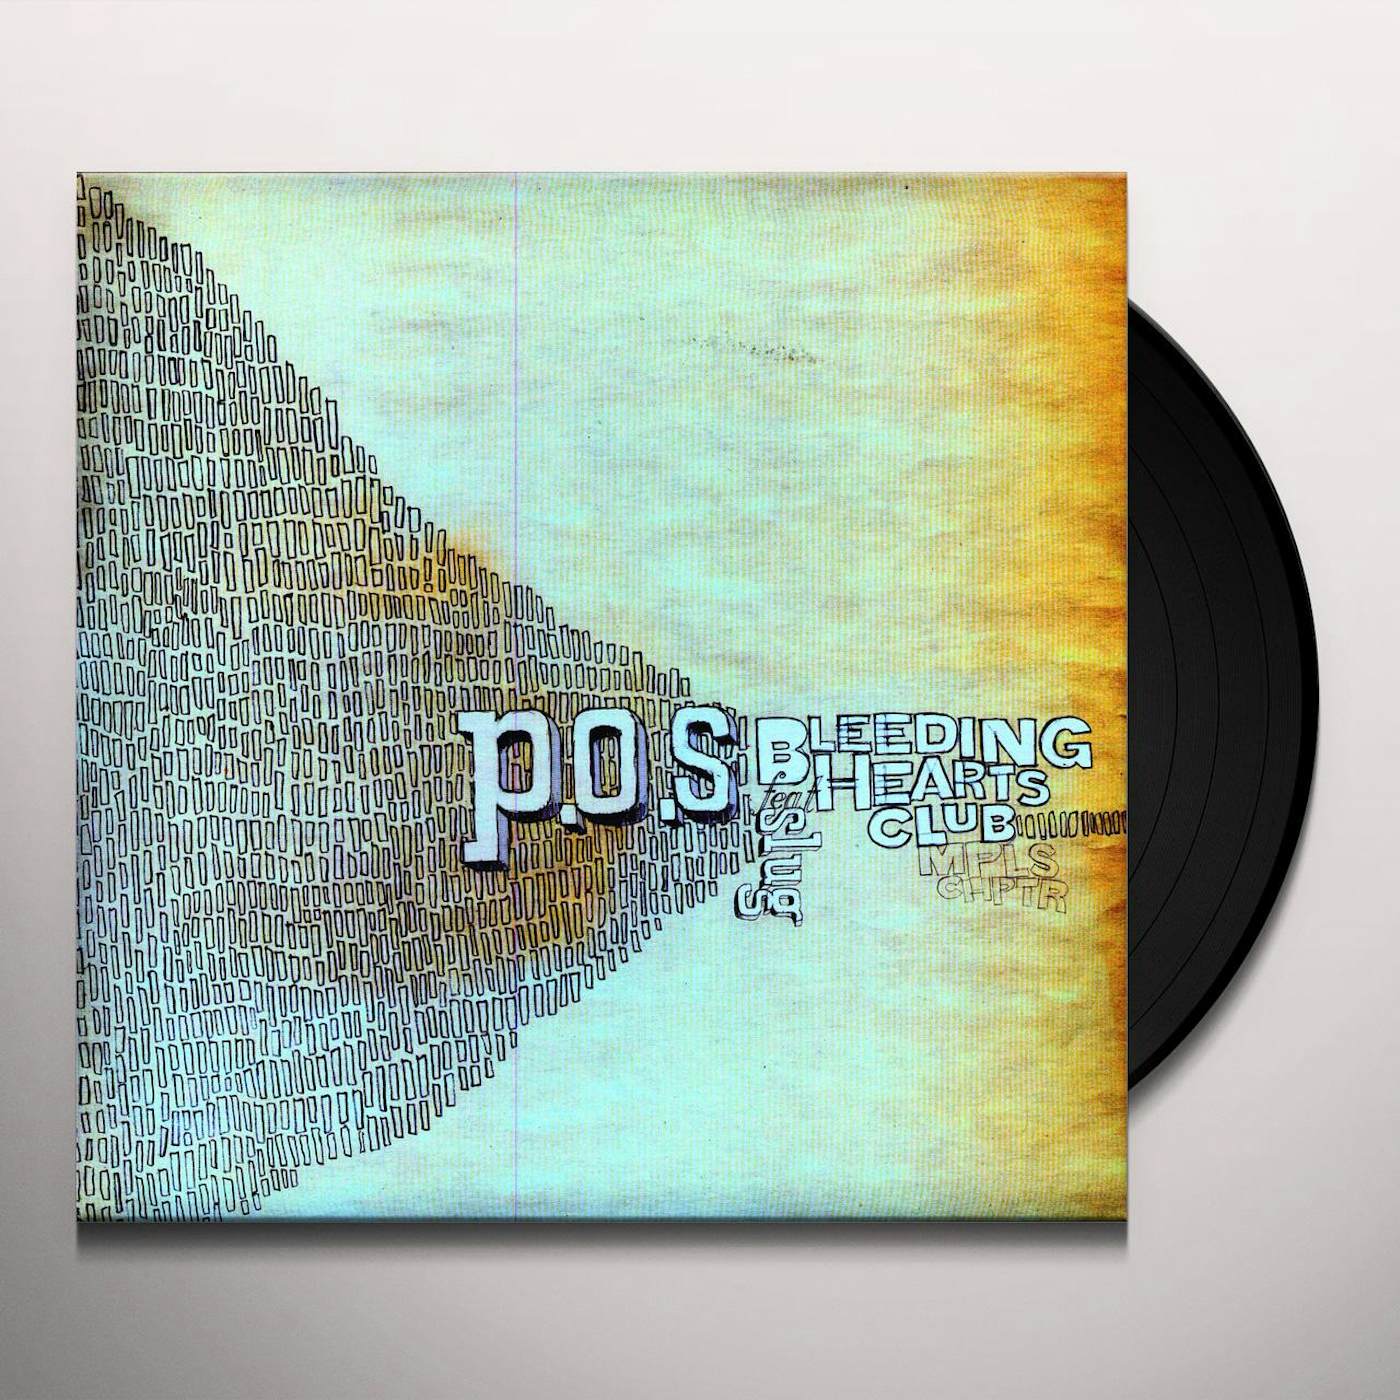 P.O.S BLEEDING HEARTS CLUB Vinyl Record